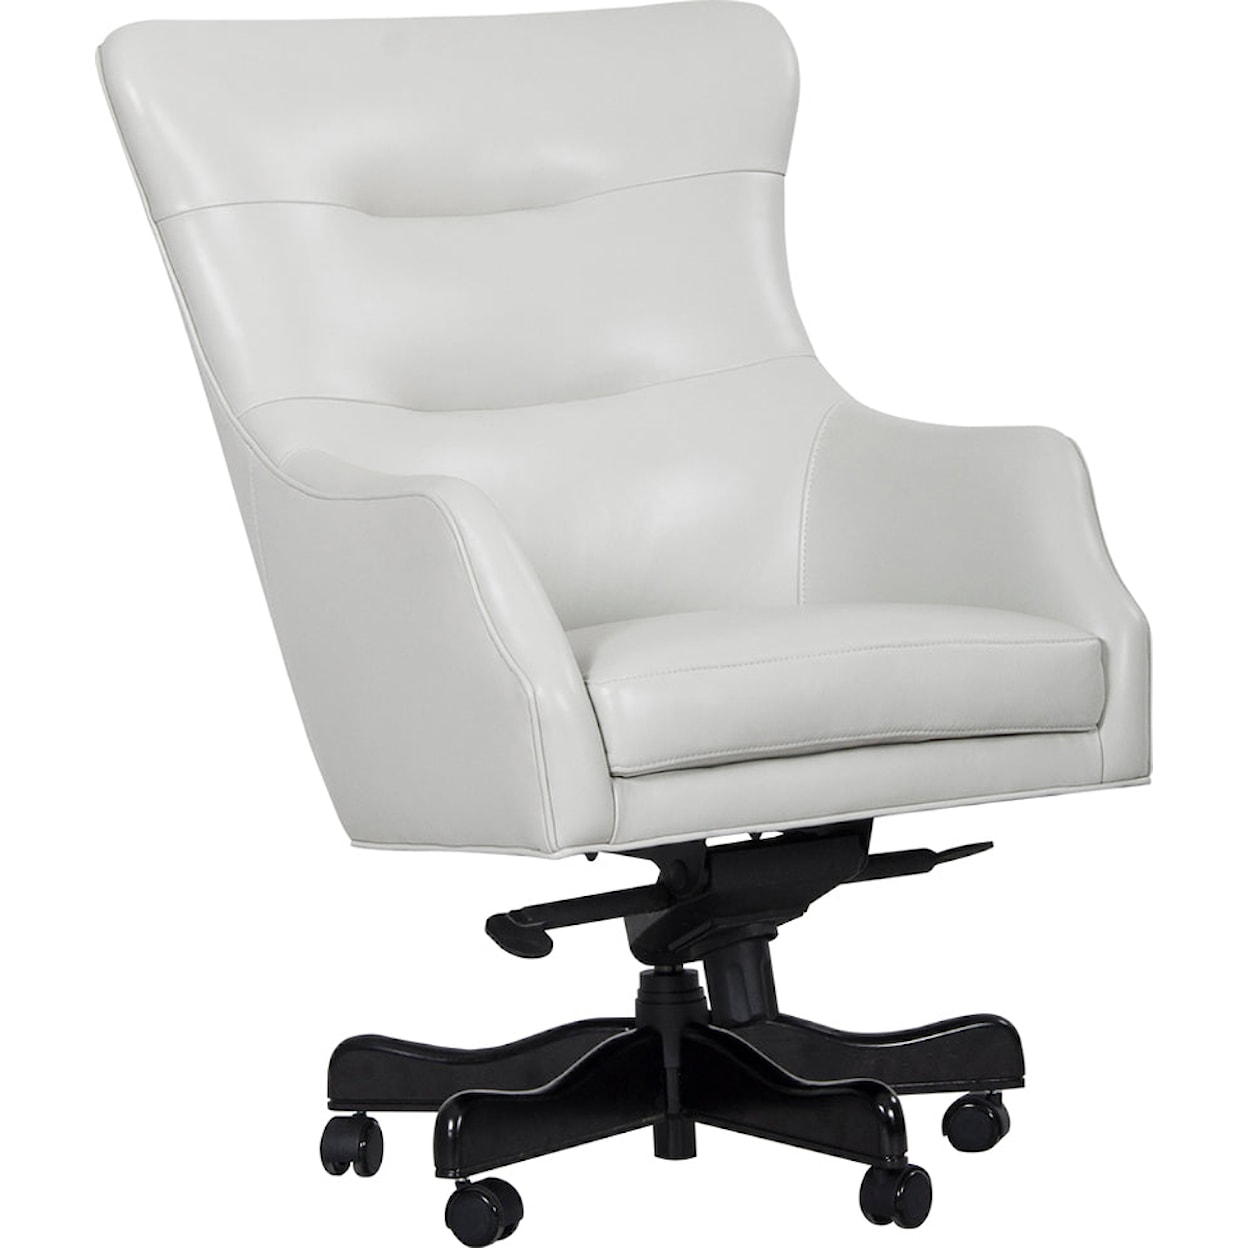 Carolina Living Dc#122-Ala - Desk Chair Leather Desk Chair